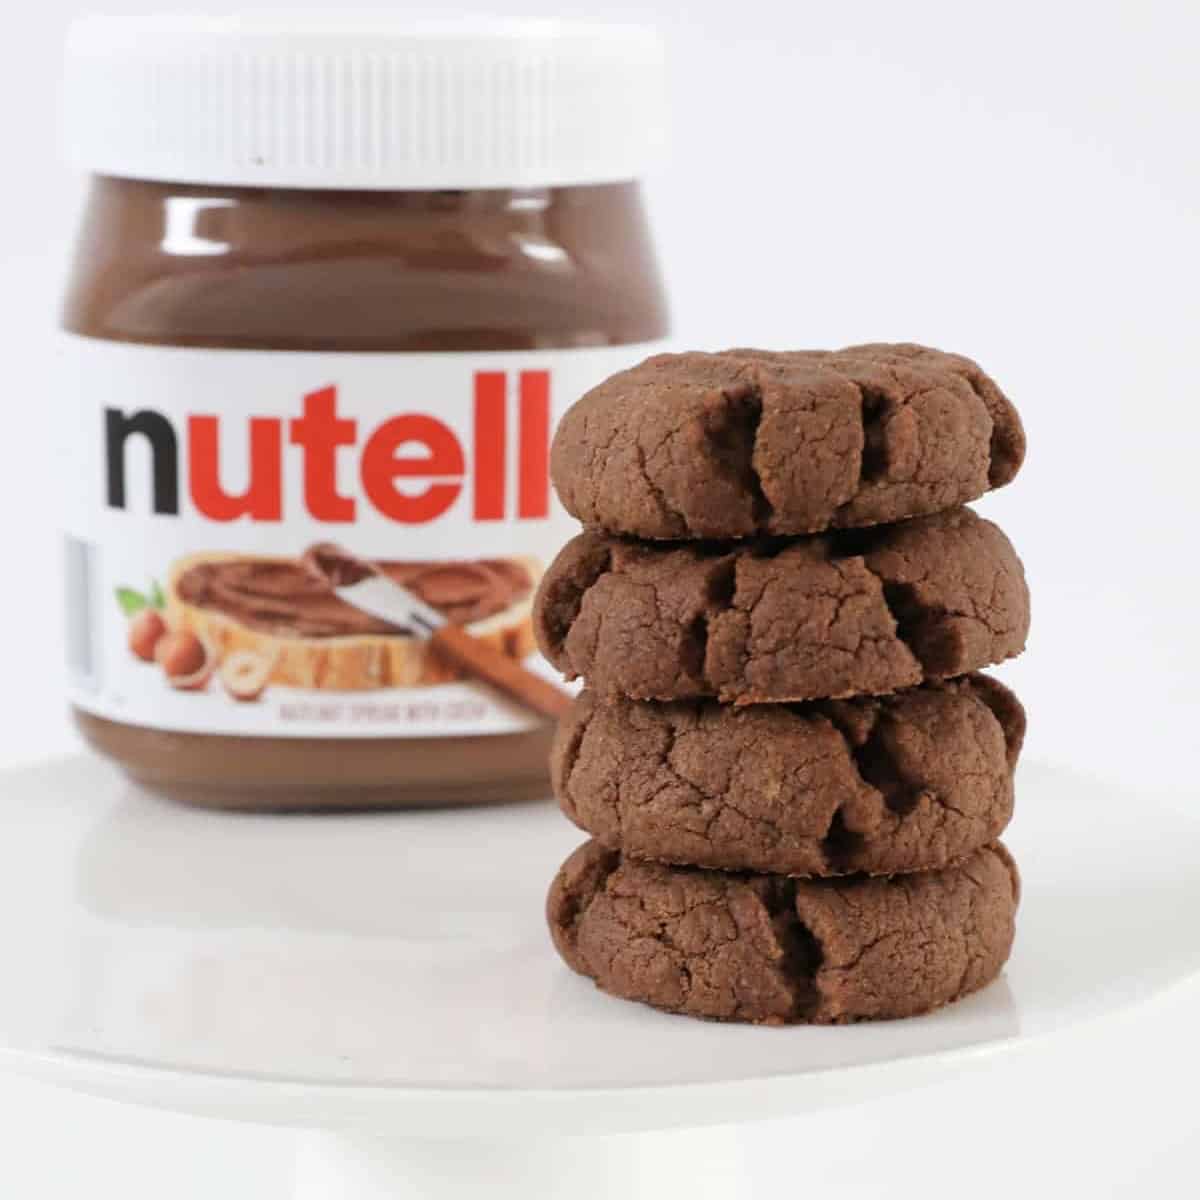 https://bakeplaysmile.com/wp-content/uploads/2023/02/Nutella-Cookies-feature.jpg